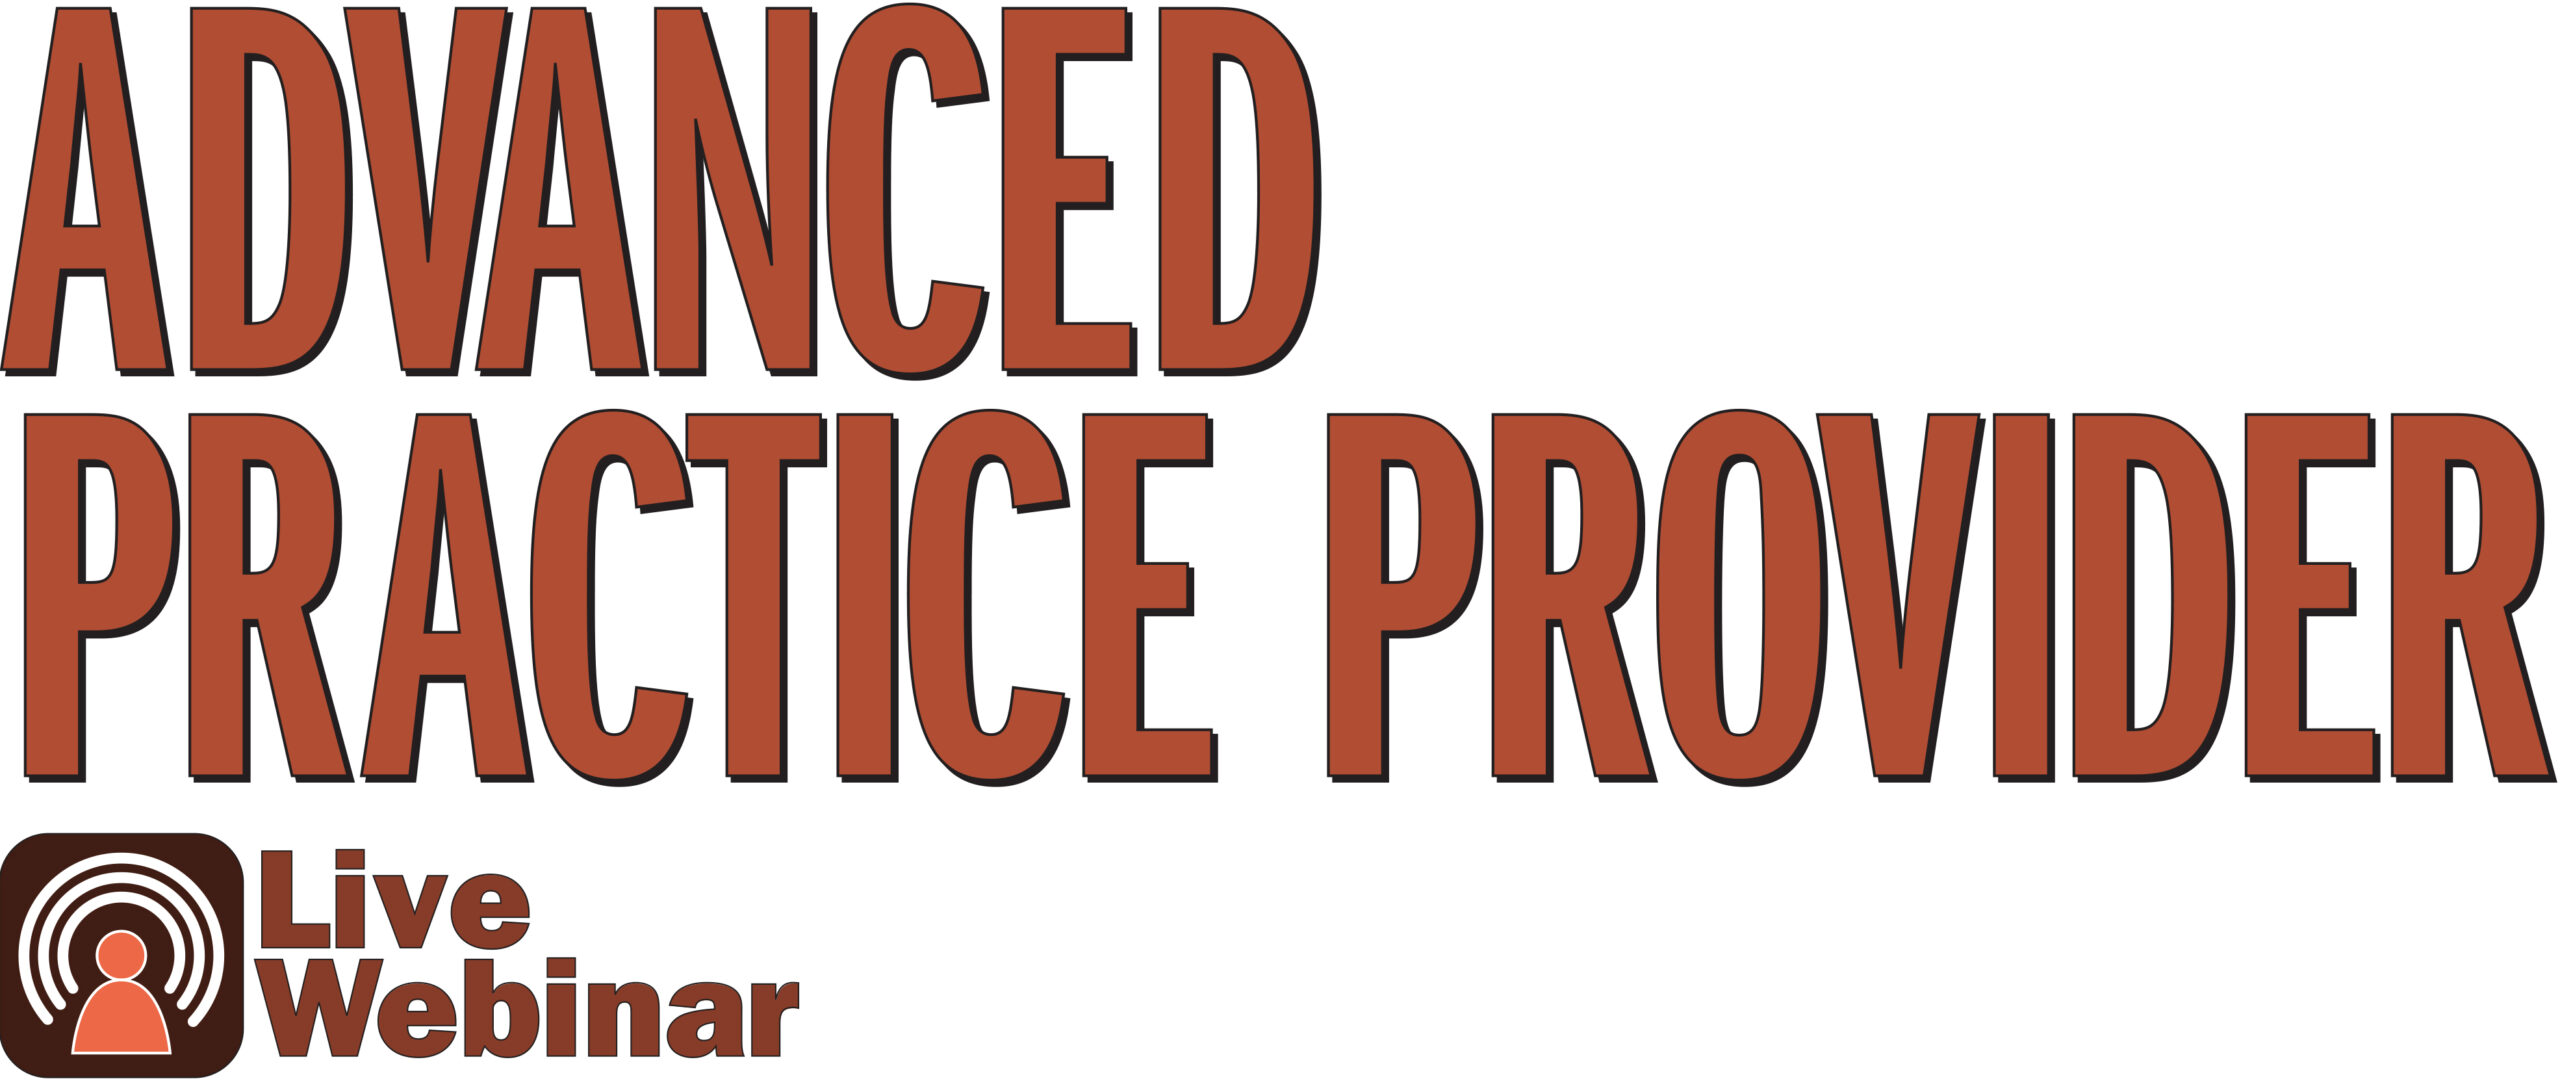 Advanced Practice Provider Logo